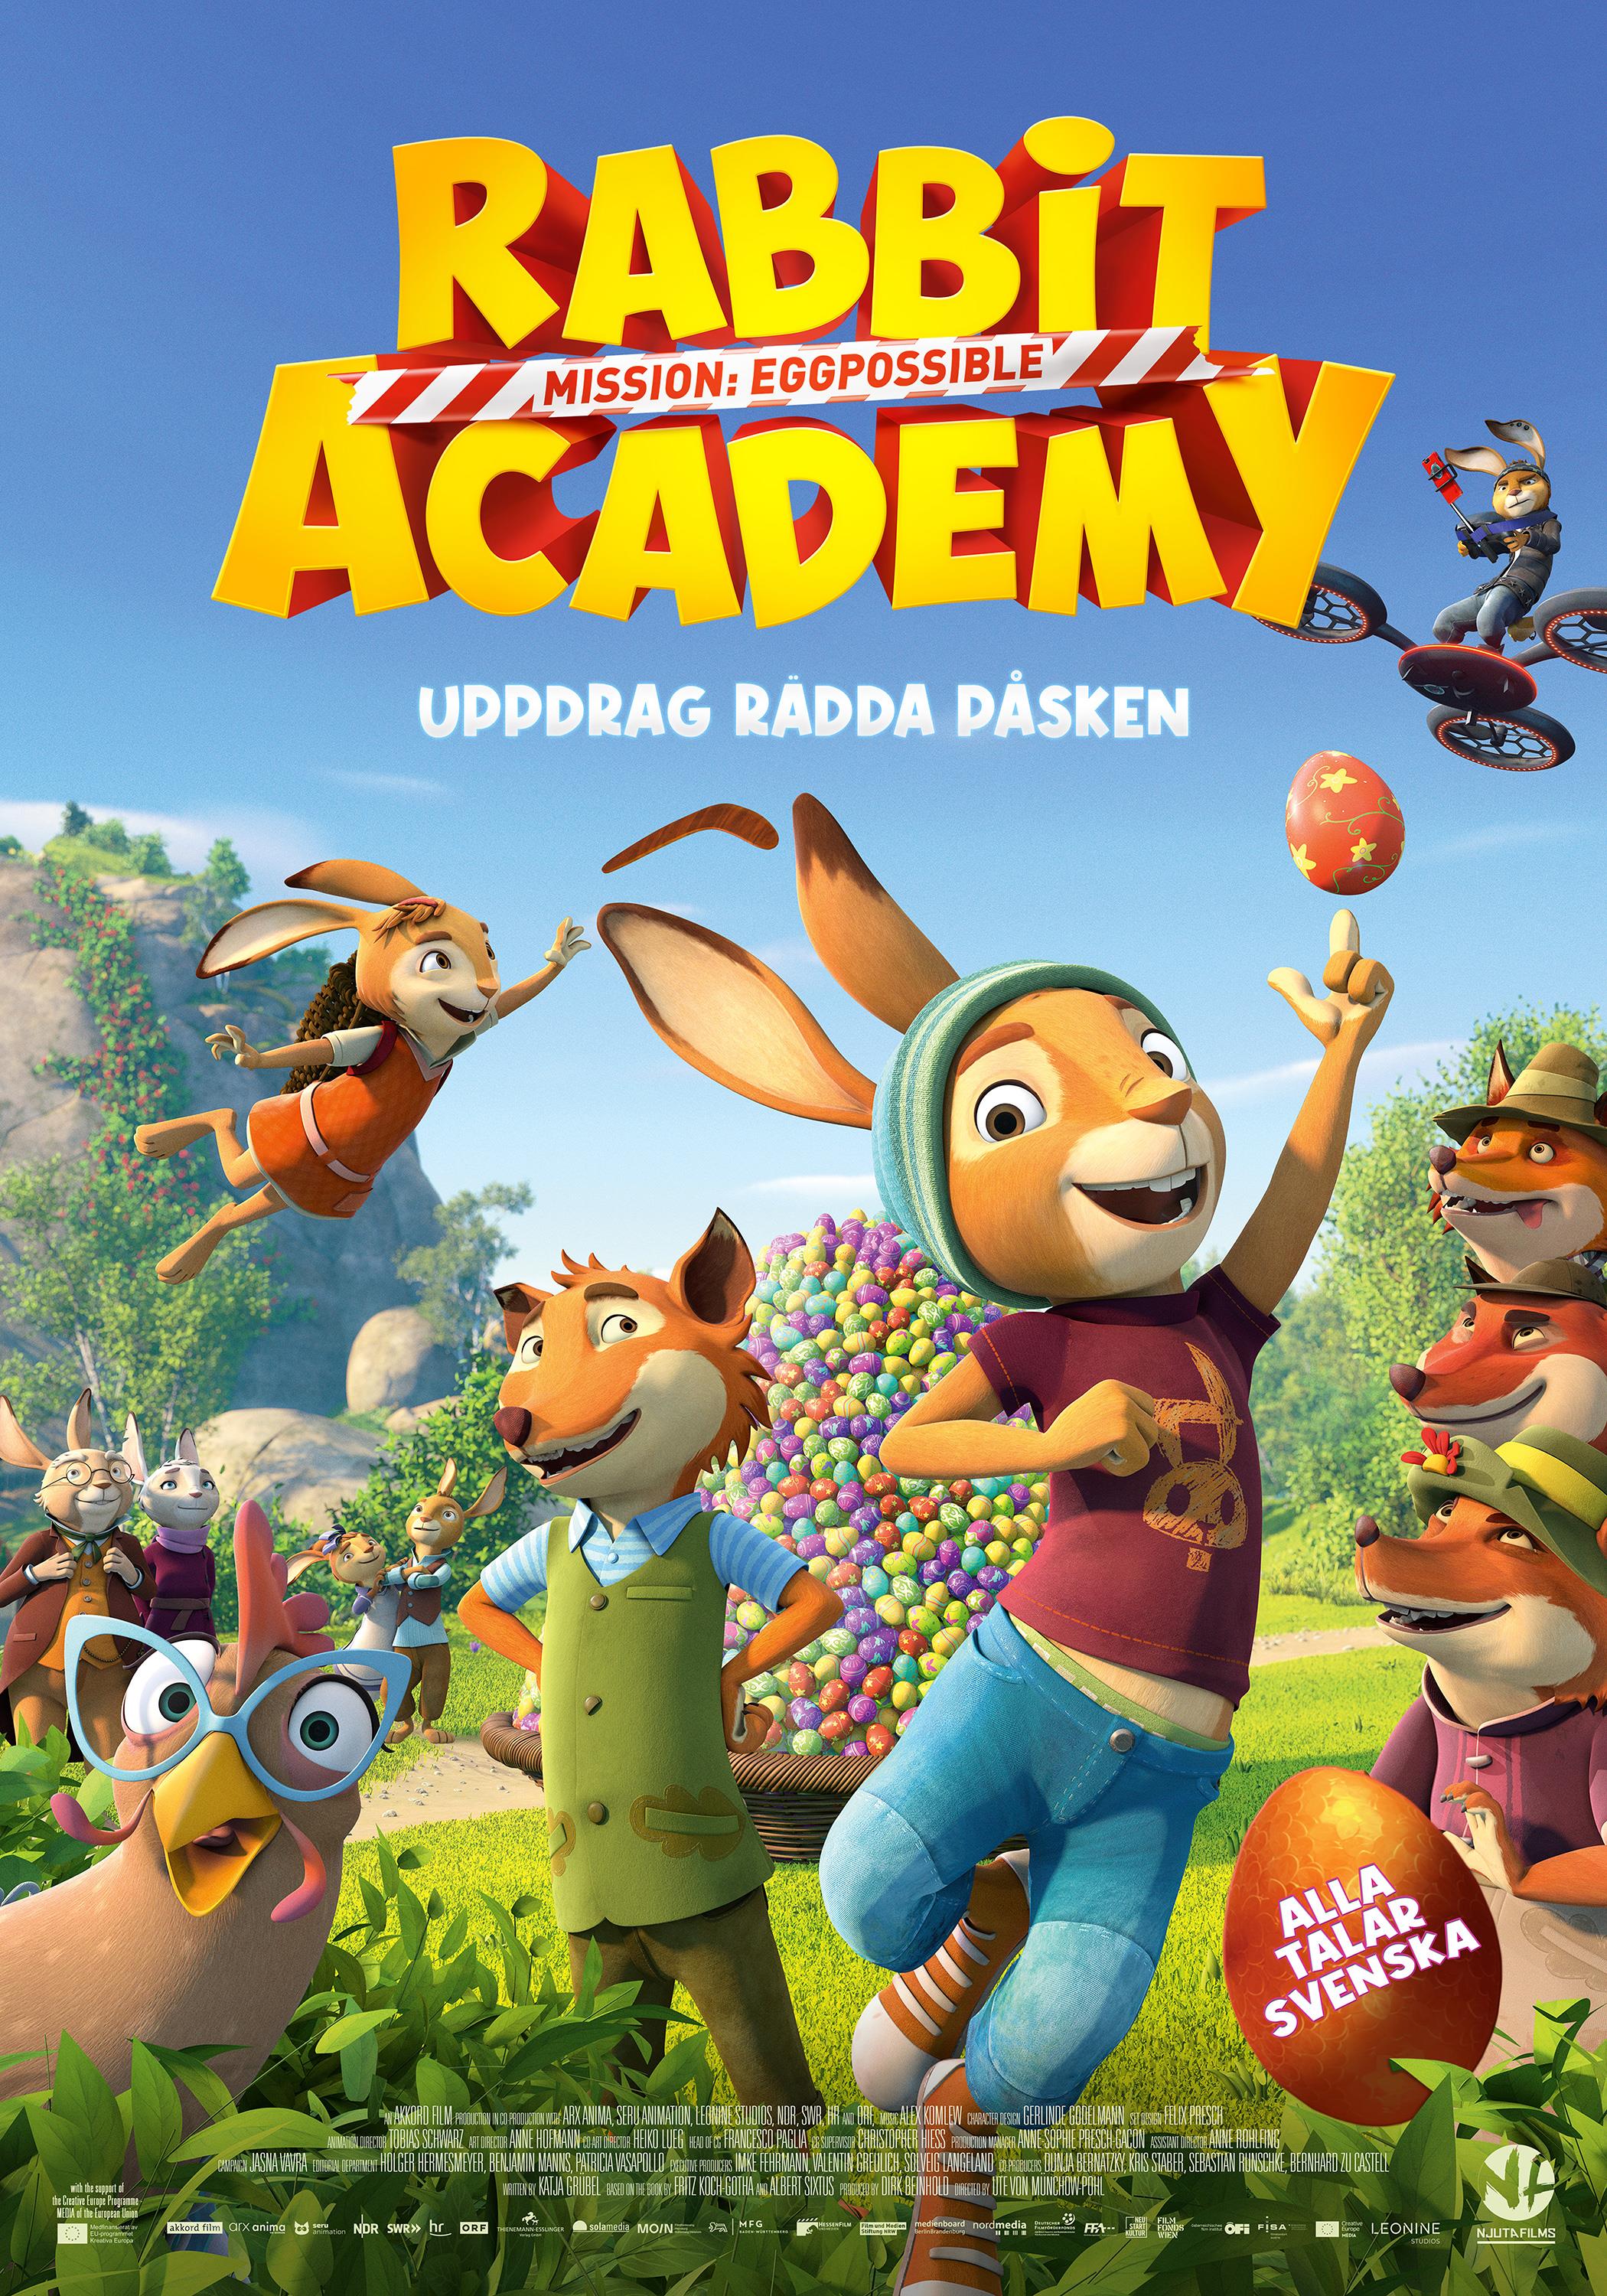 Rabbit Academy